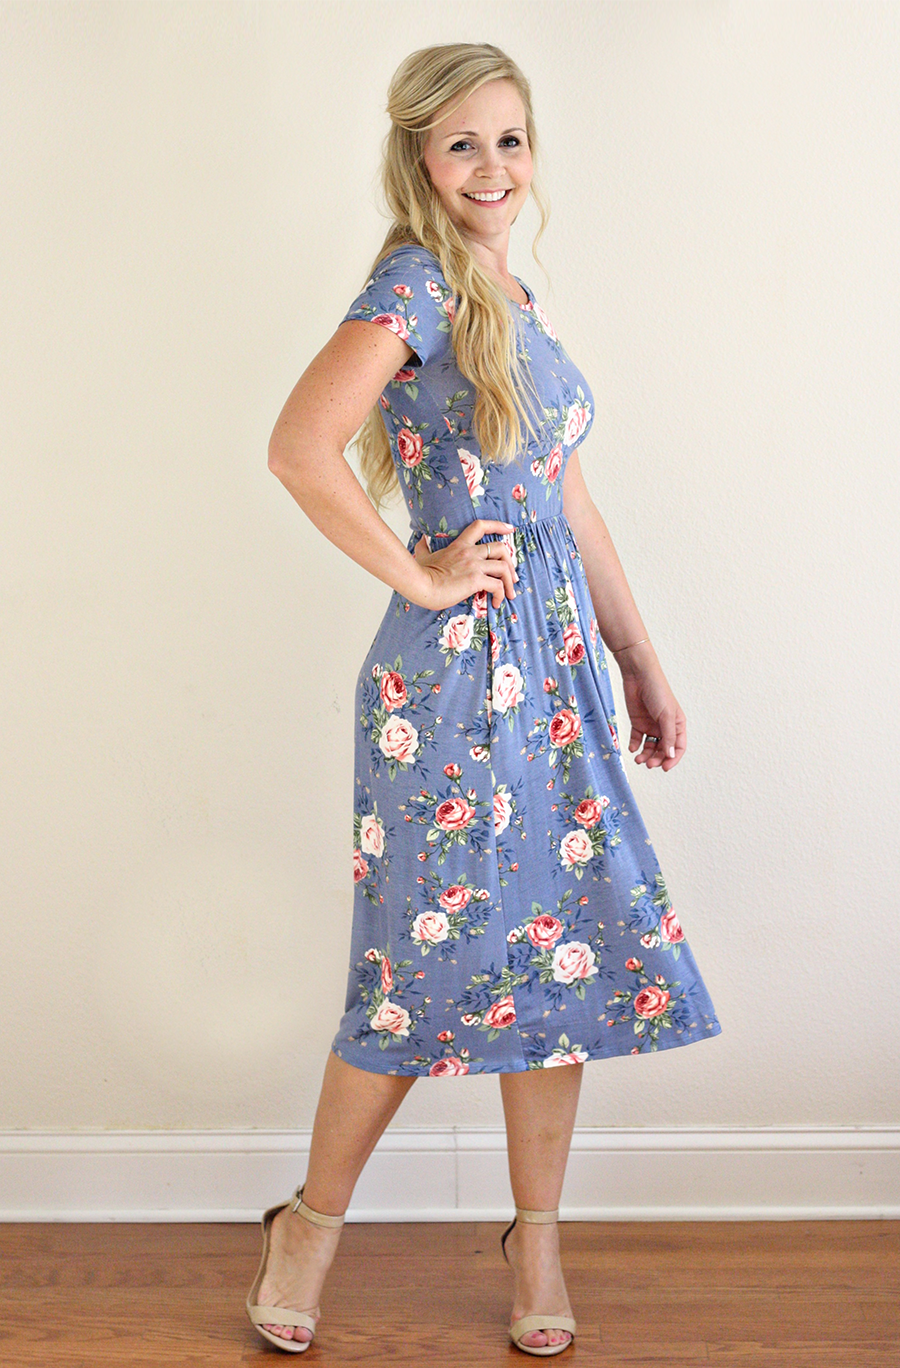 Modest & Femine Floral Dress by Cleo Madison | Ashlee Proffitt